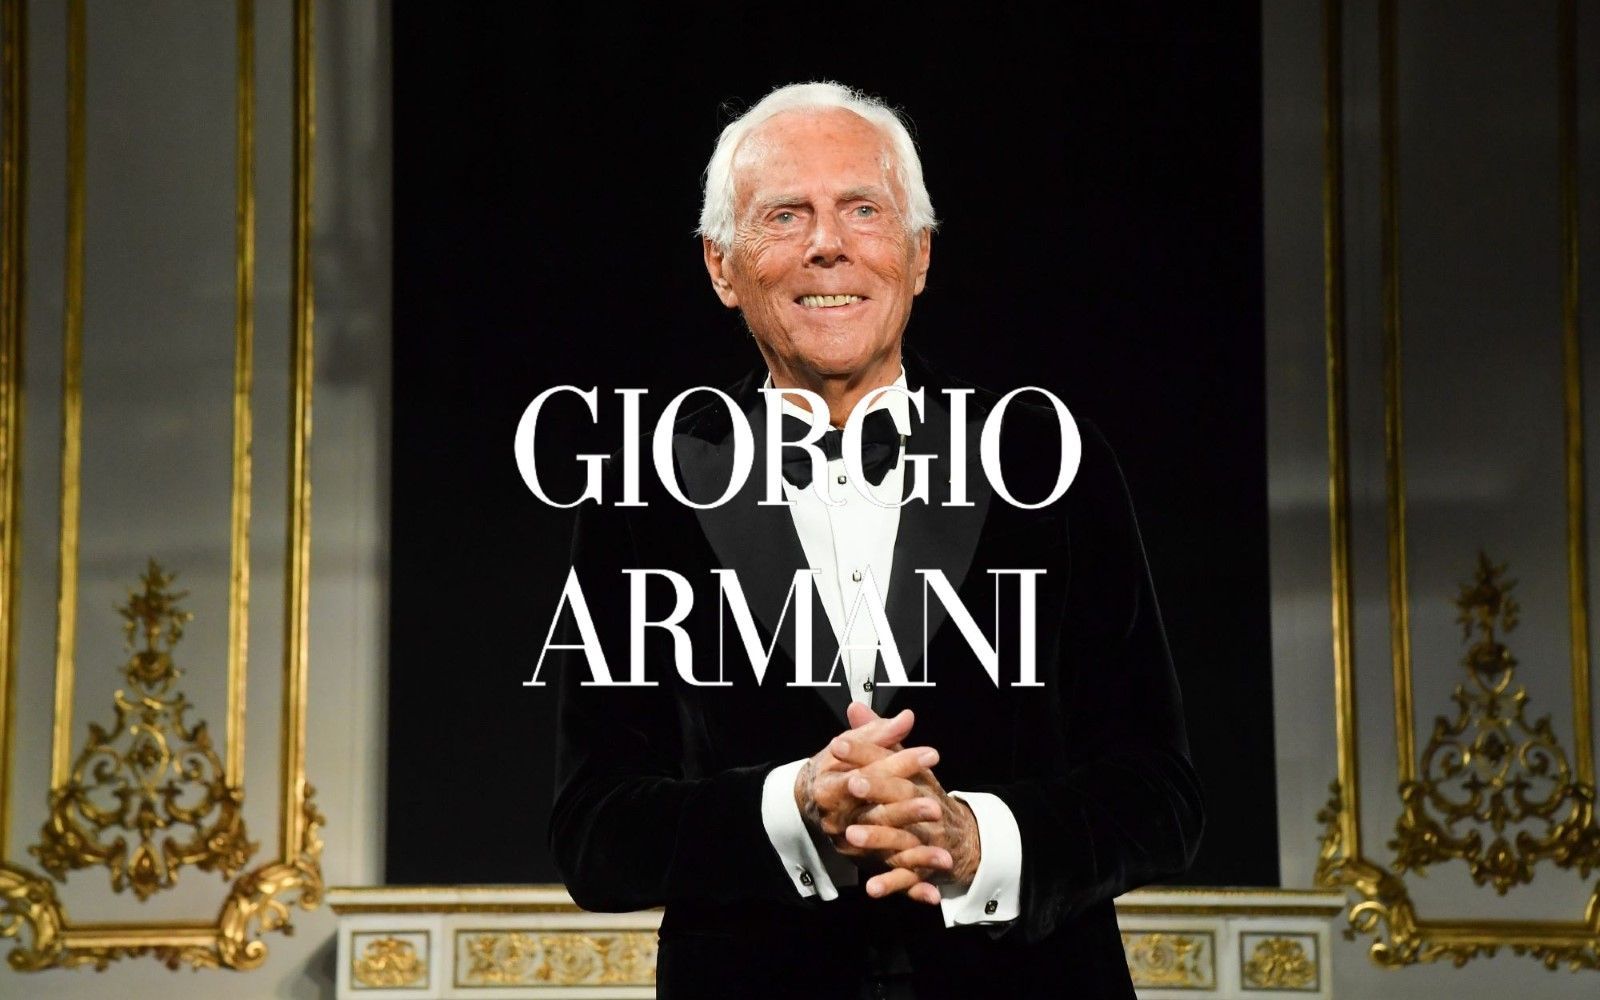 Experience Giorgio Armani: The Finest Italian Clothing & Lifestyle Items